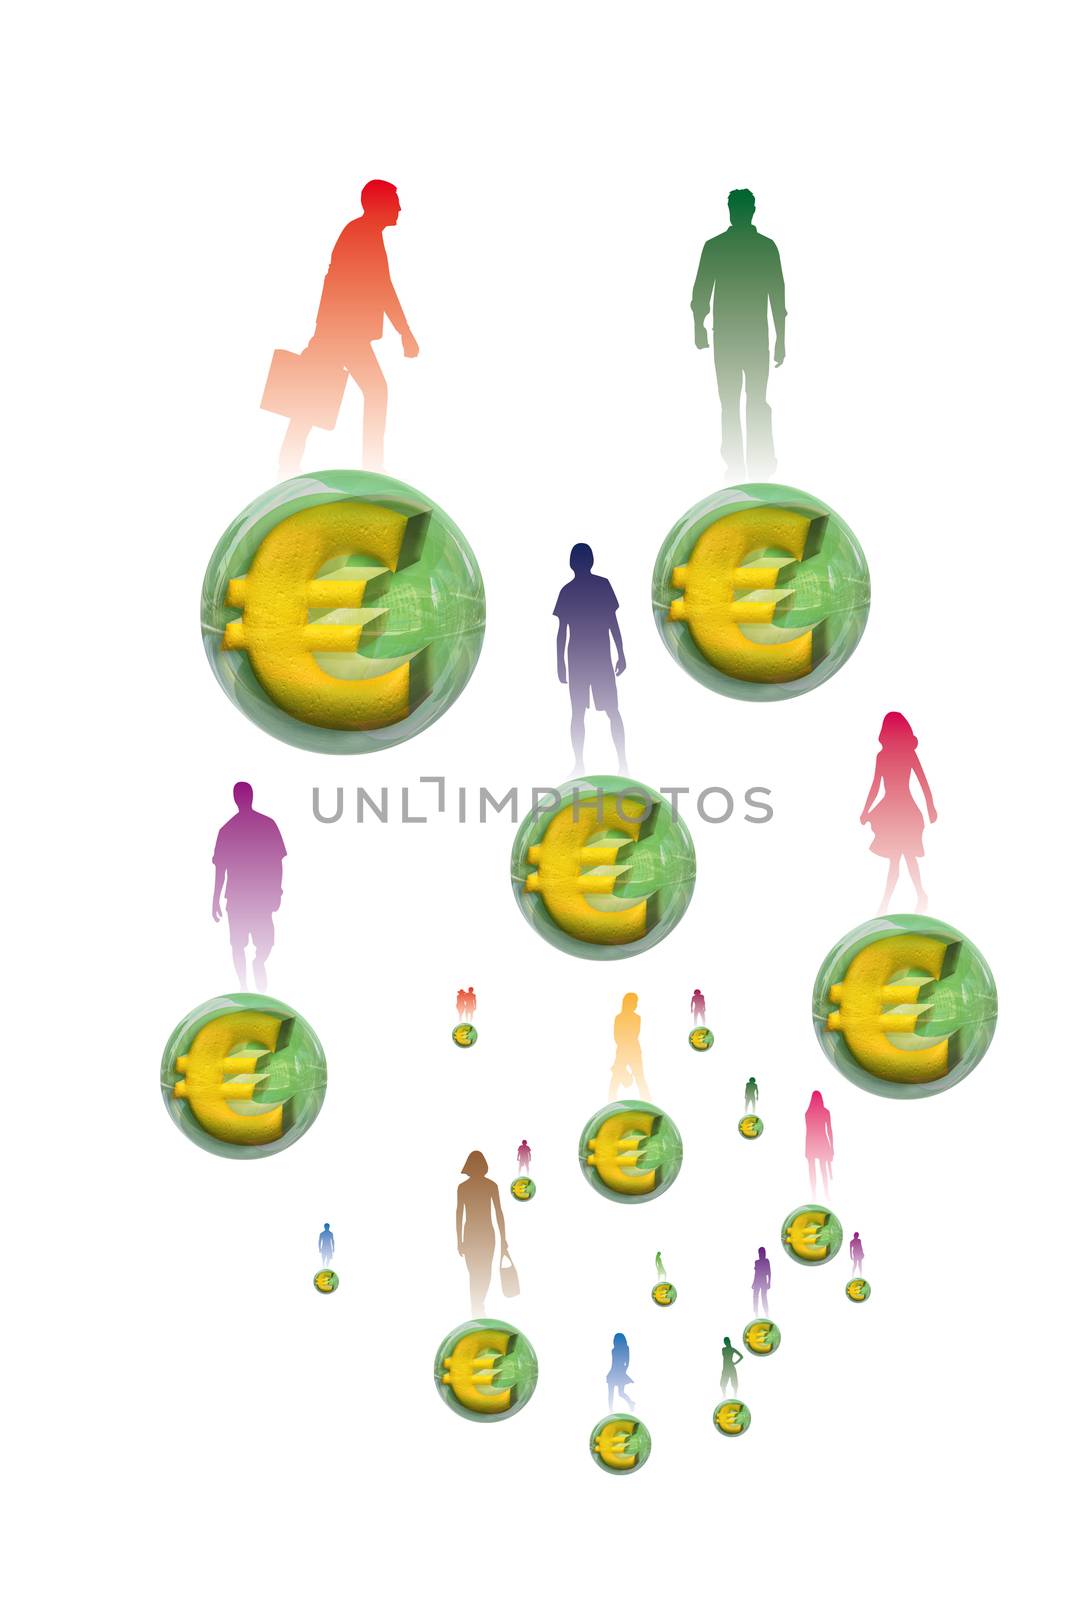 Euros by 26amandine